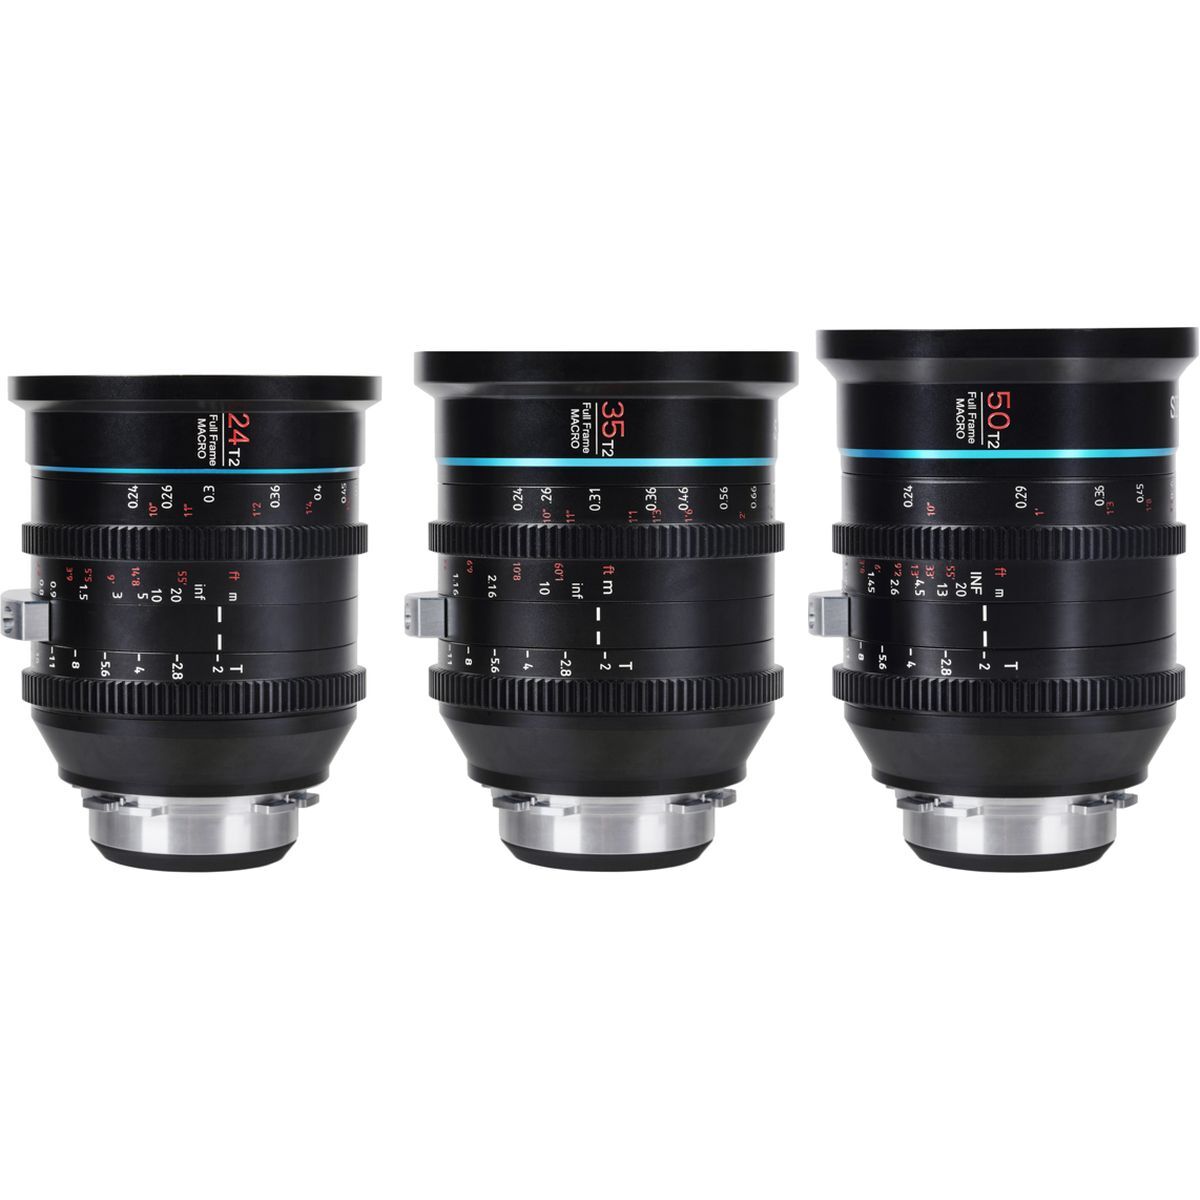 Sirui Jupiter Macro T2 Full-Frame Cine Prime Lens Set (24 mm, 35 mm en 50 mm Cinema Lens Set), voor PL-Mount Camera's, compatibel met ALEXA Mini LF, ALEXA Mini, ALEXA LF, Professionele PL-mount lens